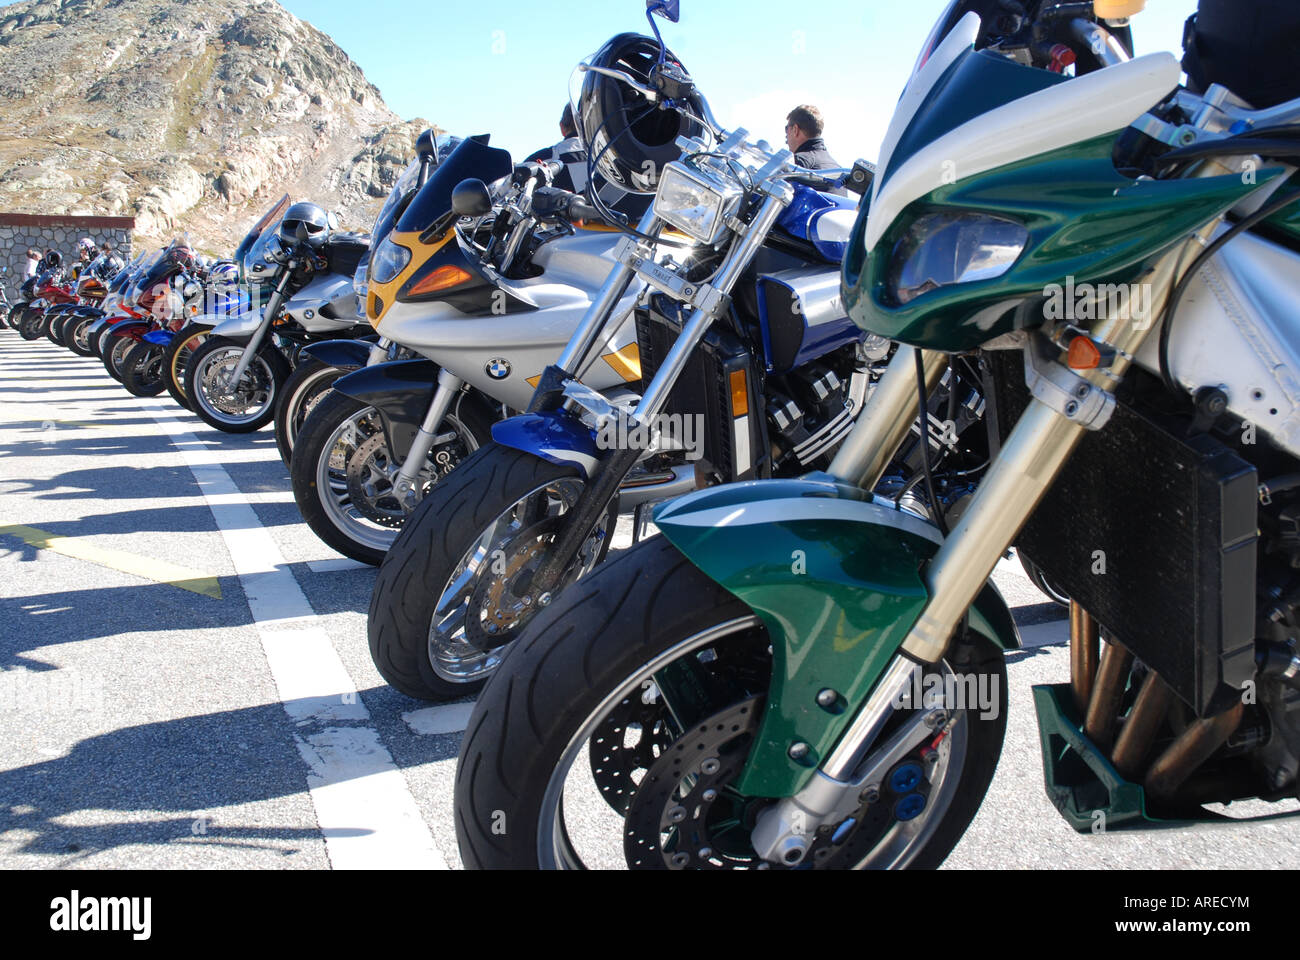 Motorbike on sunday hi-res stock photography and images - Alamy